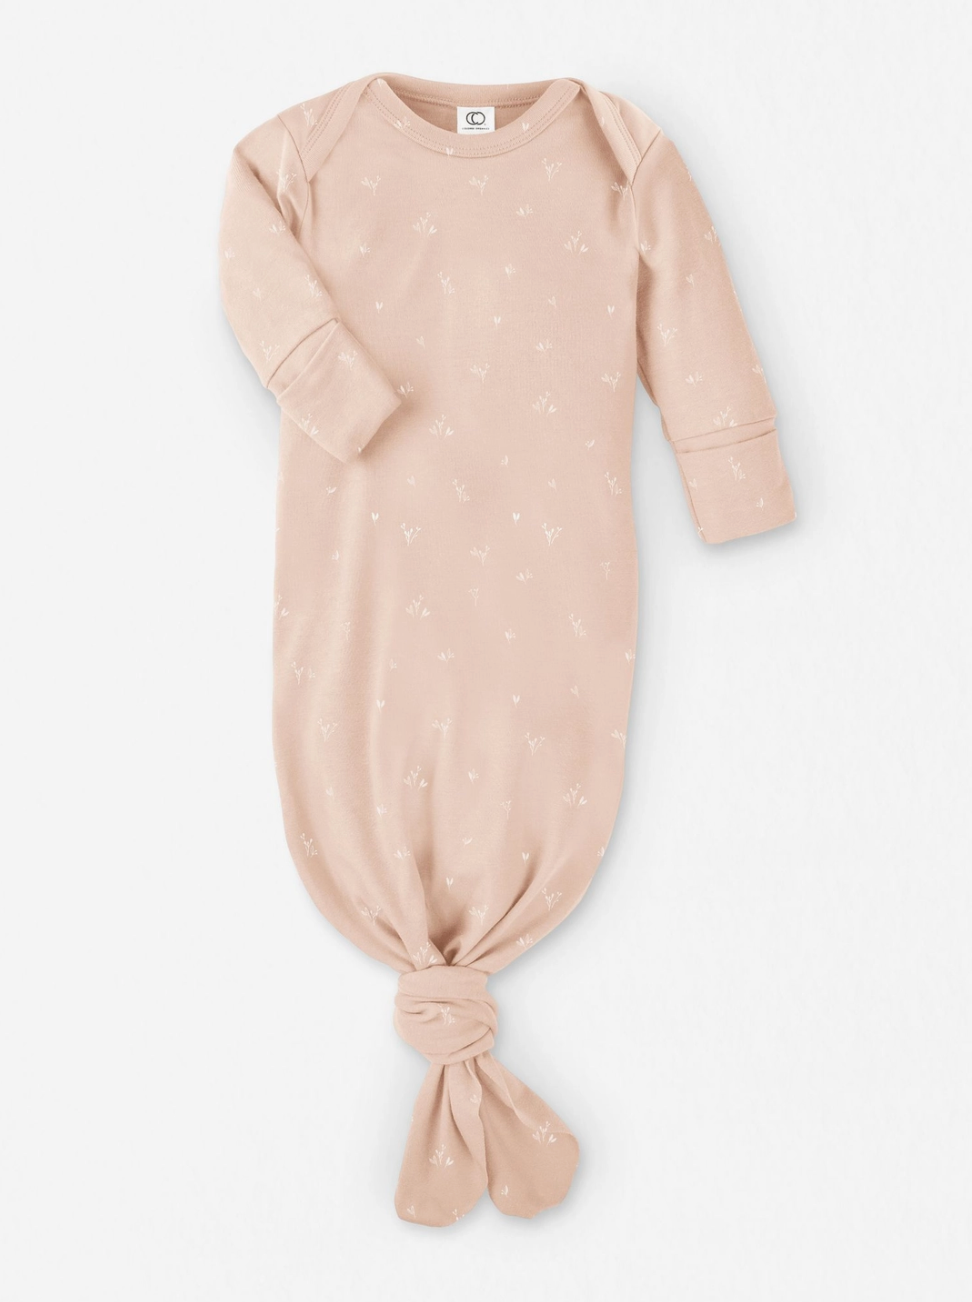 Landry Infant Gown Newborn - Cora Floral Print